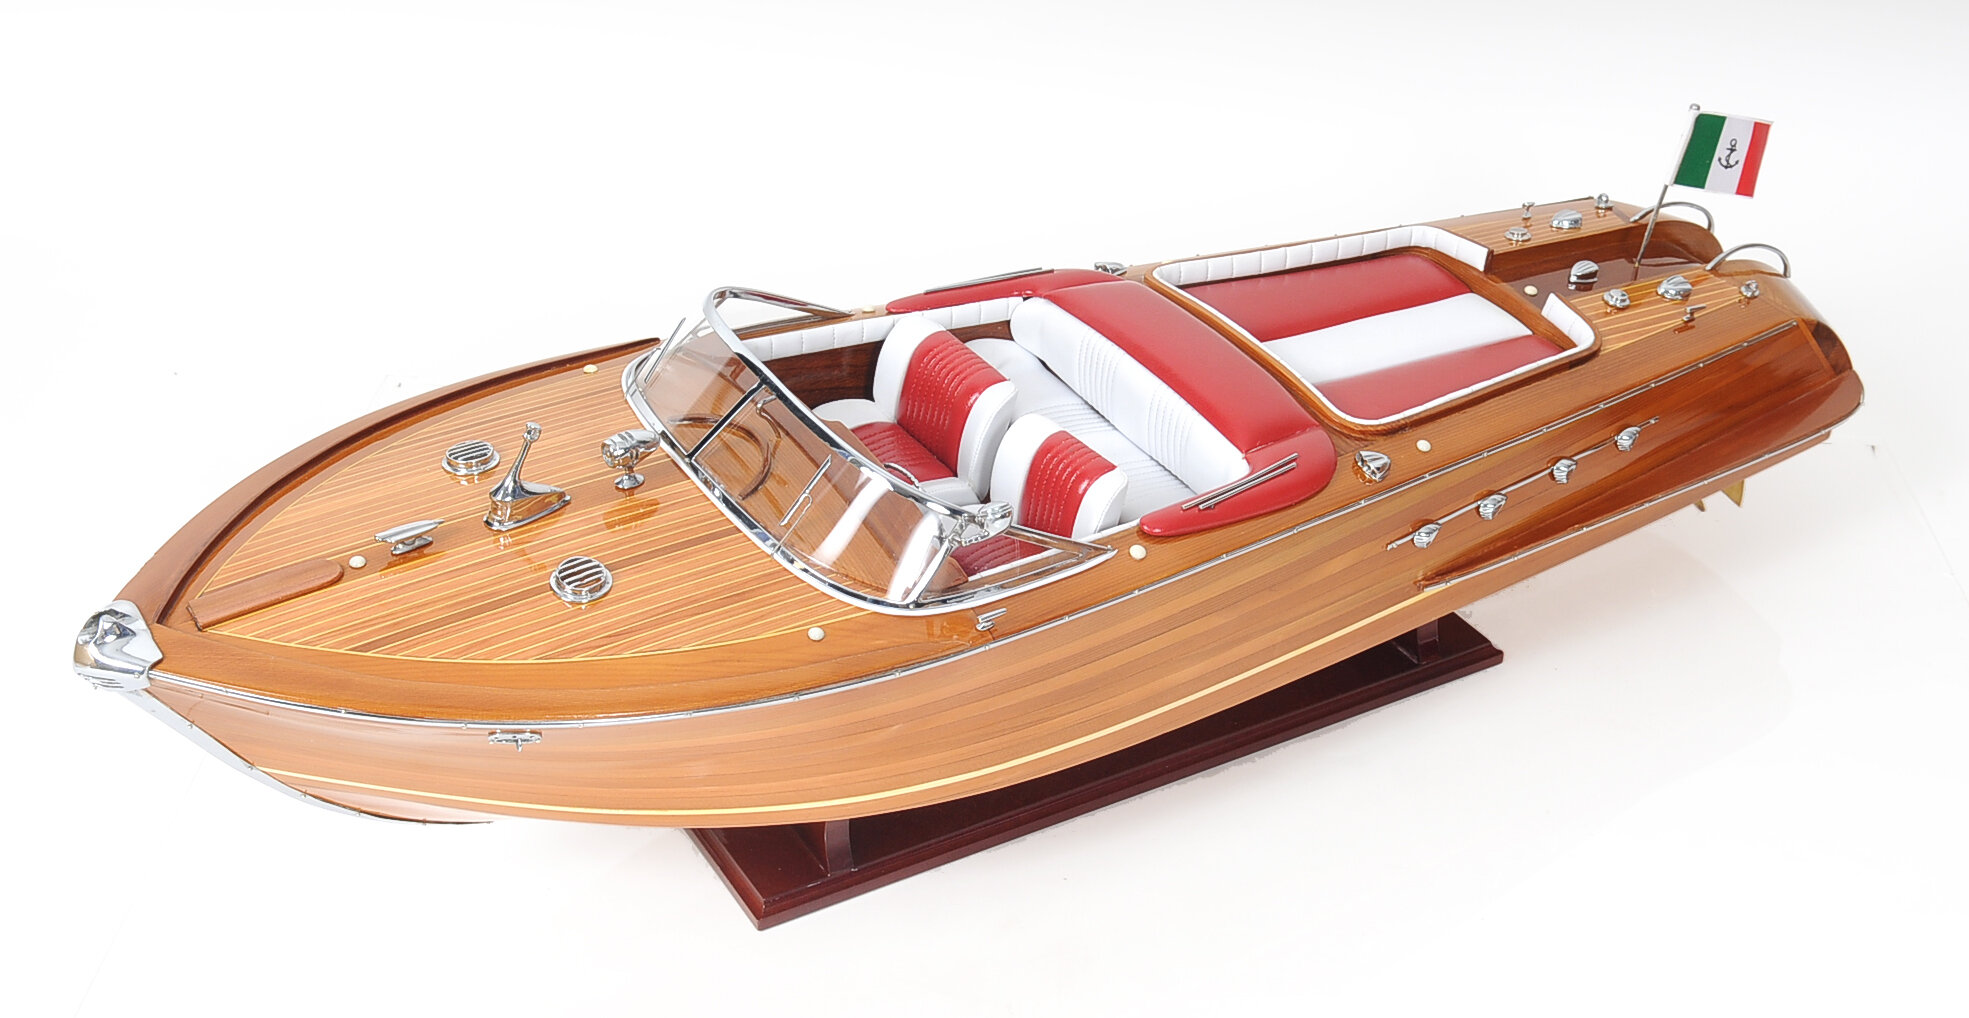 Riva Aquarama 34" Wood Model Boat L 87 cm Handmade Italian Speed Boat Handcraft 